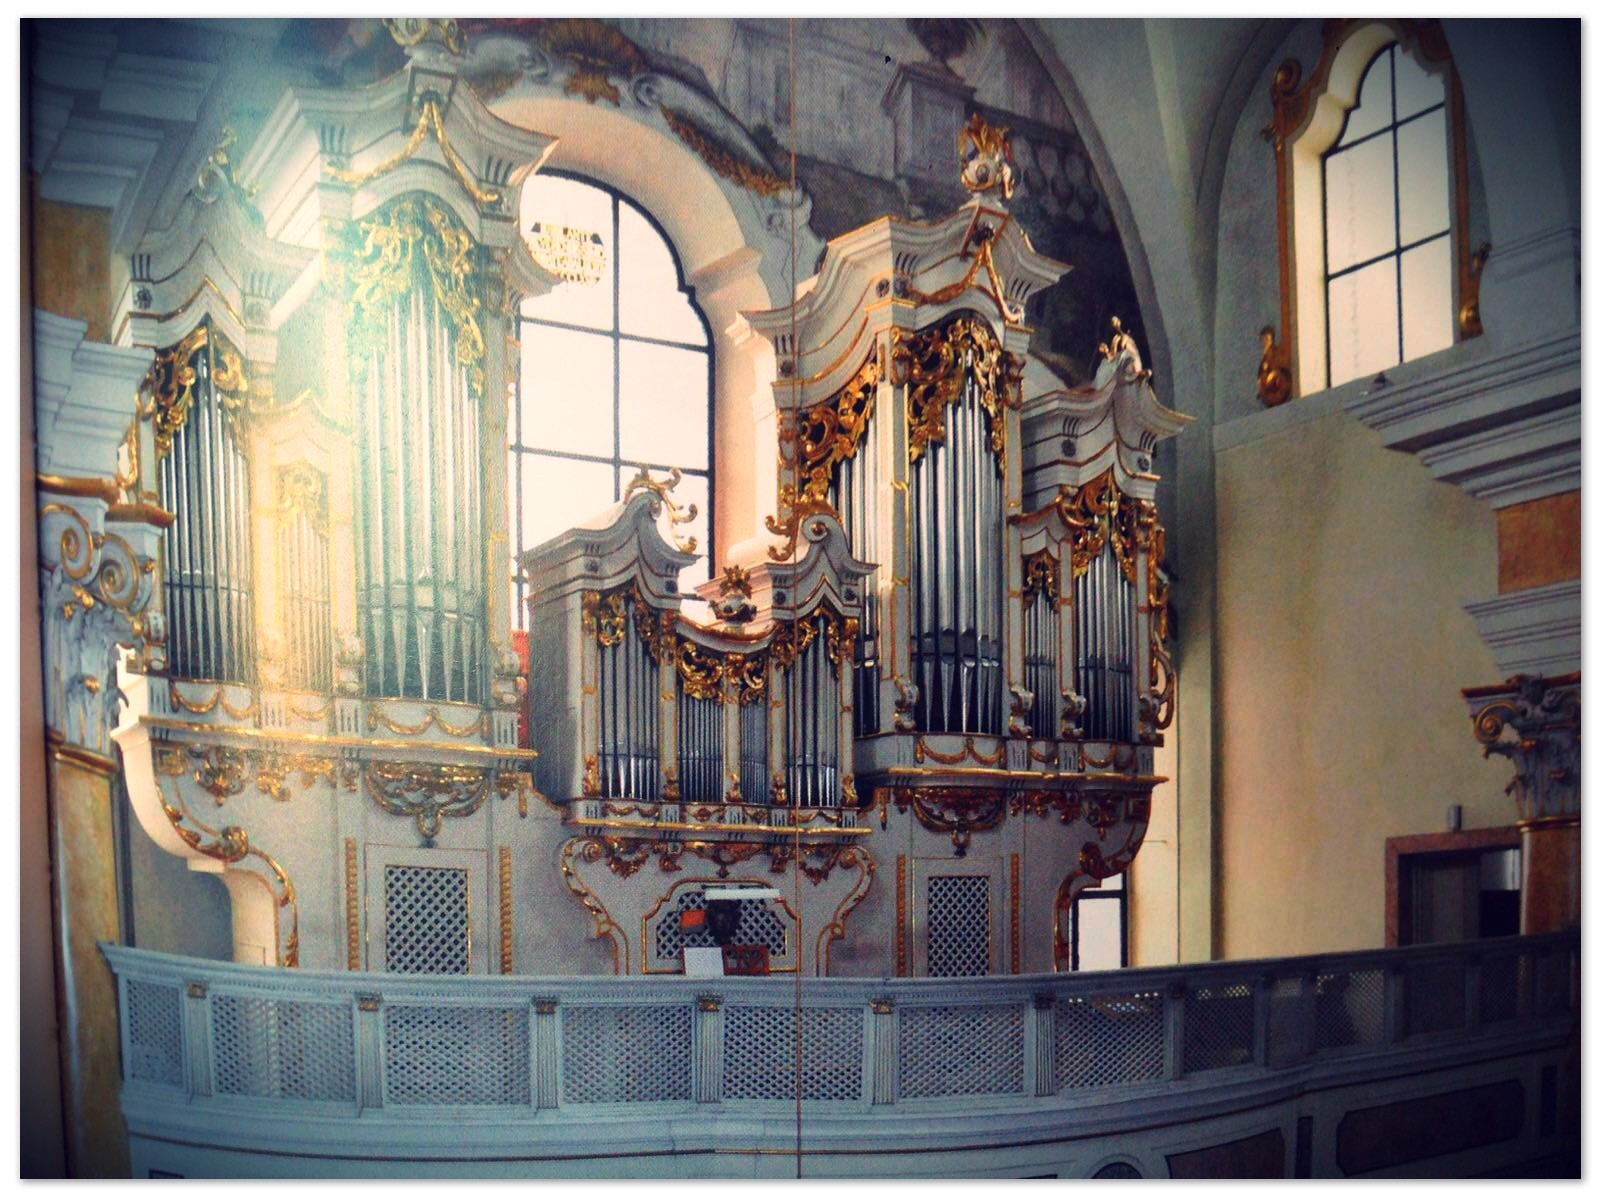 Orgel.JPG